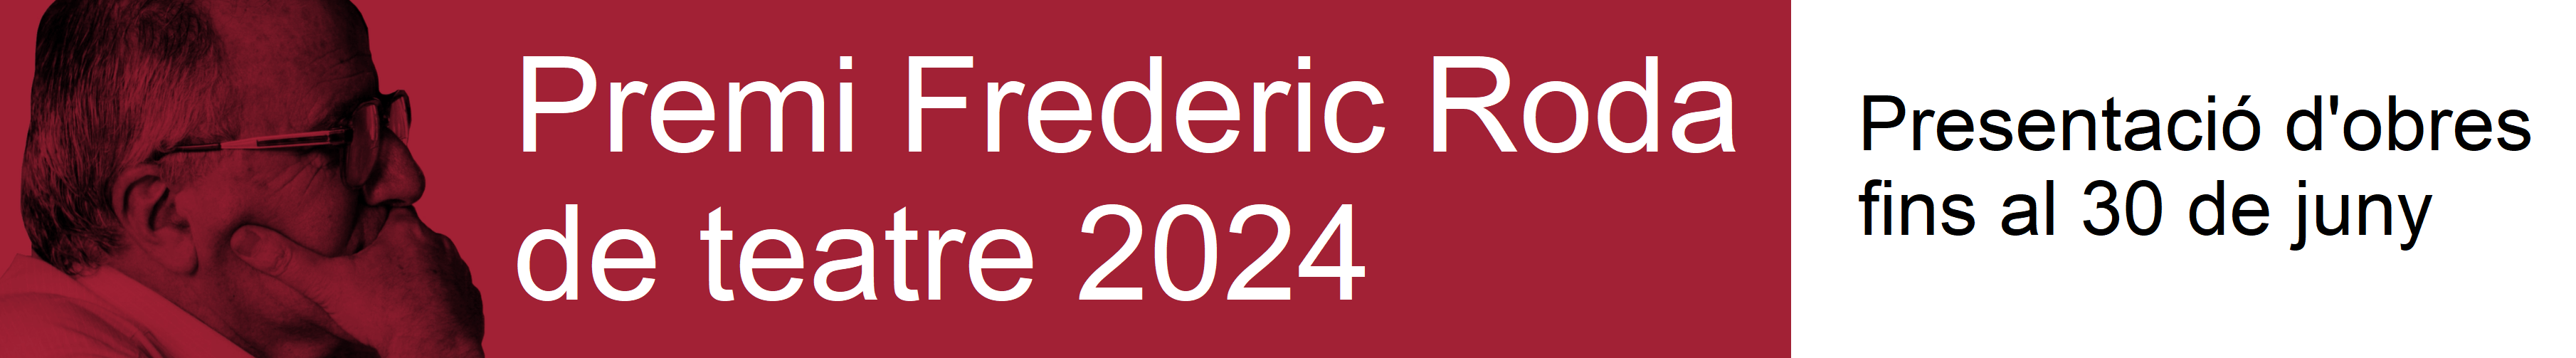 Premi Frederic Roda 2024